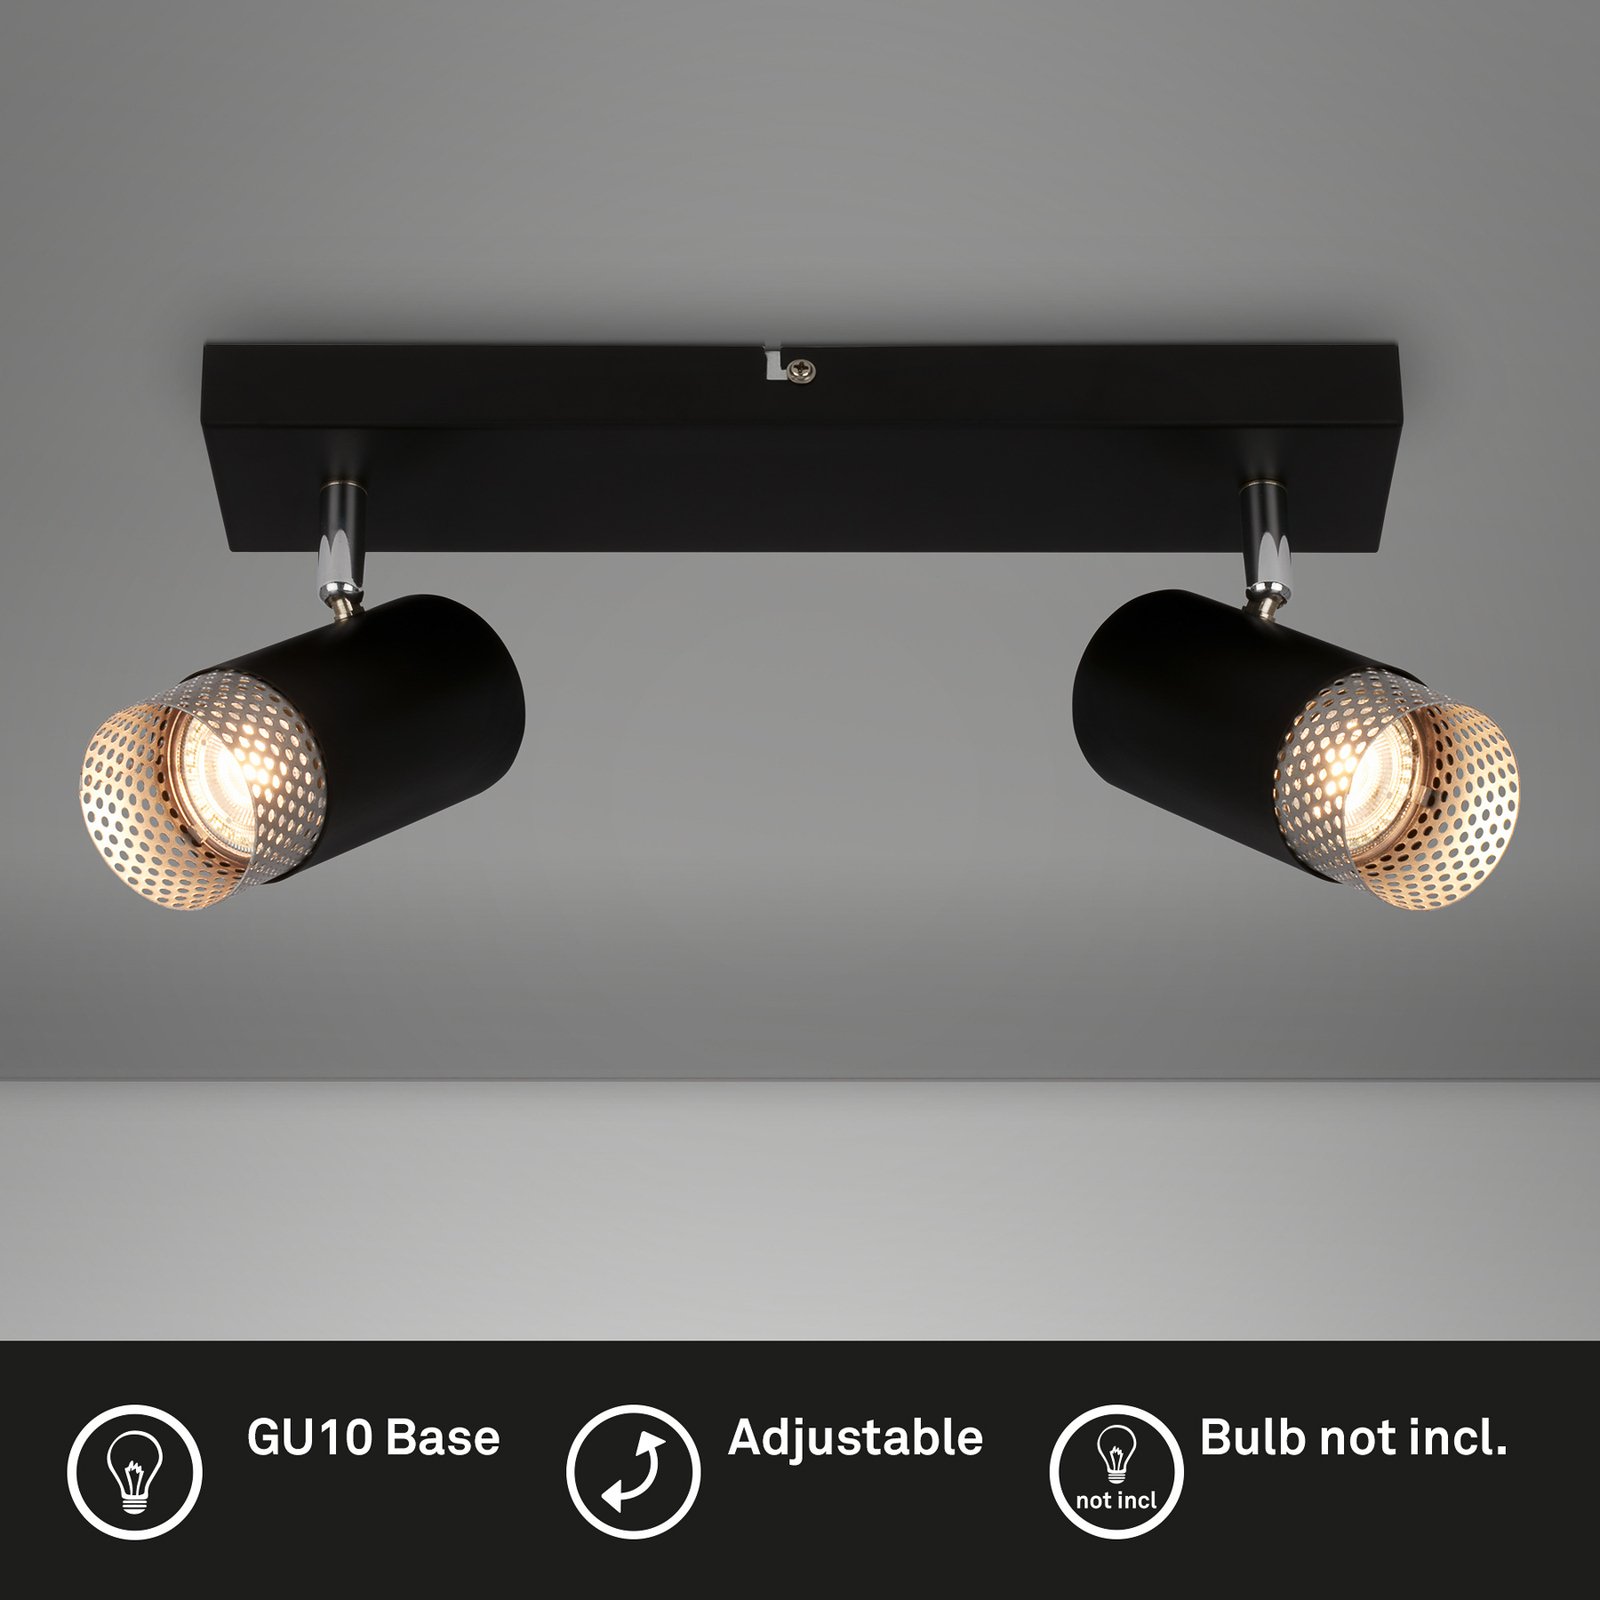 Plek GU10 downlight black/silver 2-bulb